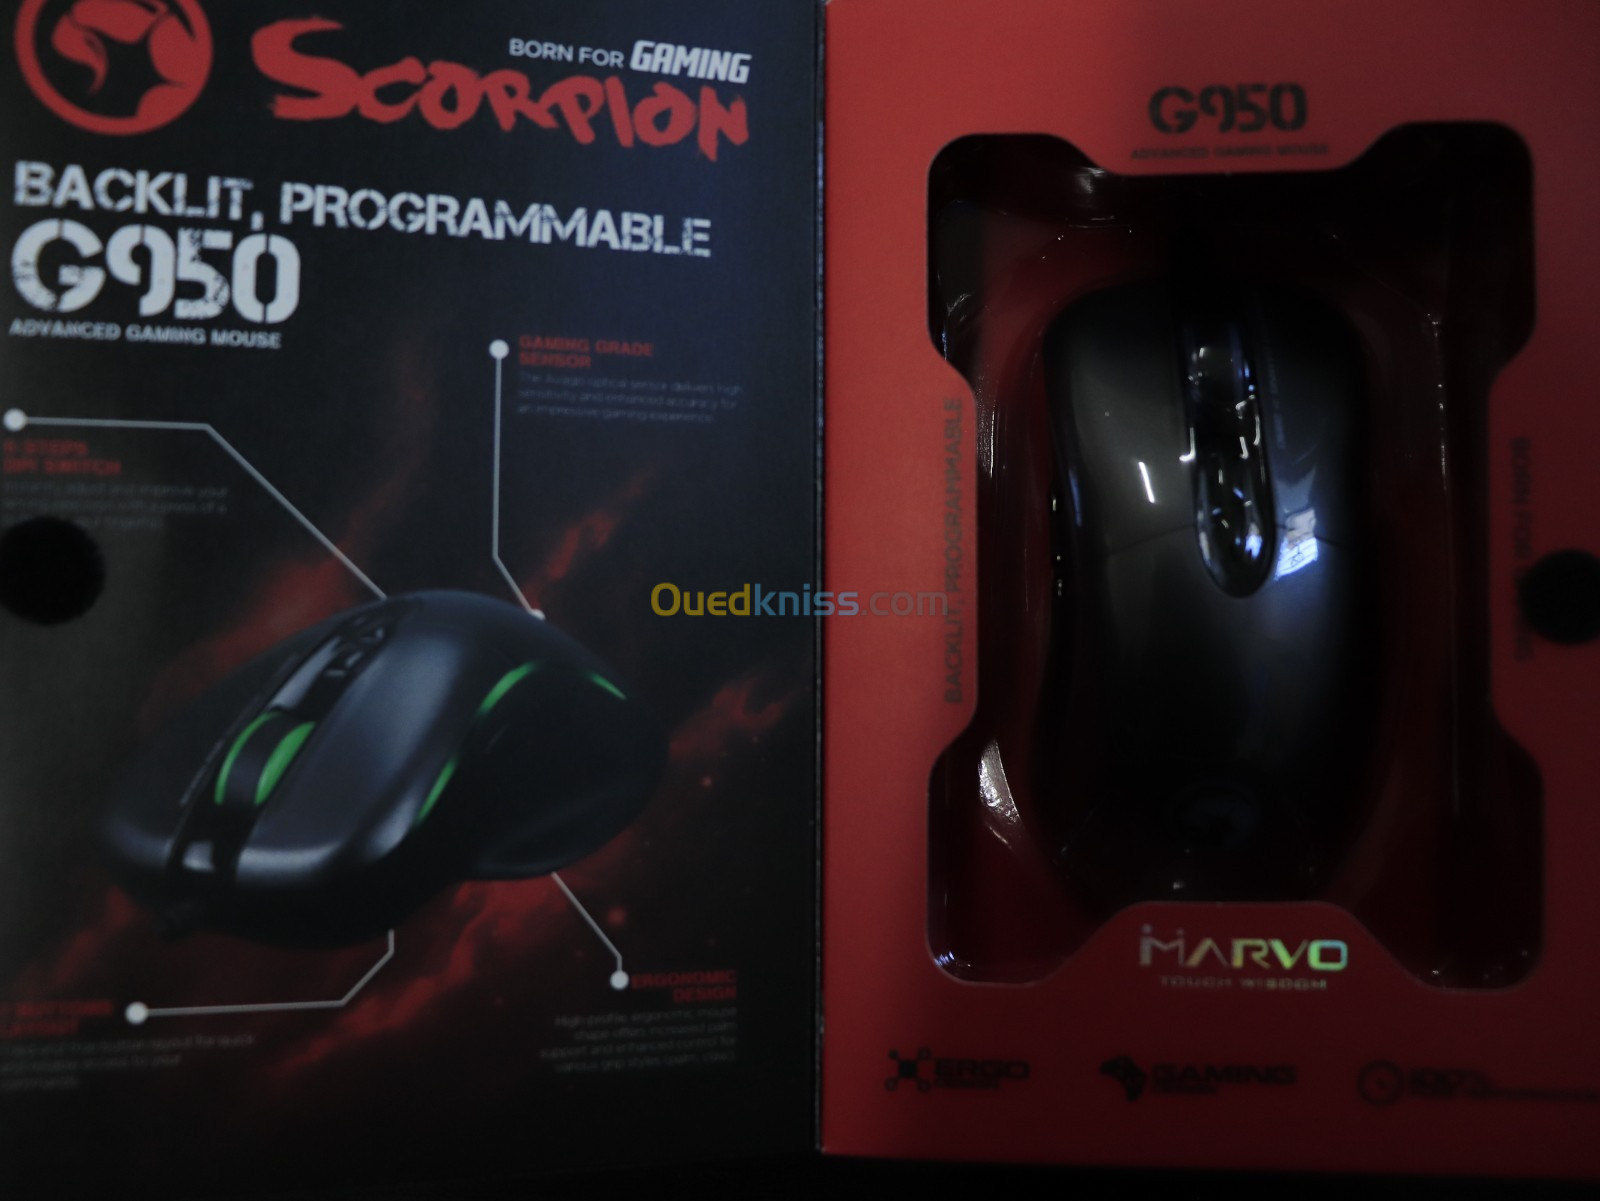 souris gaming marvo scorpion G950